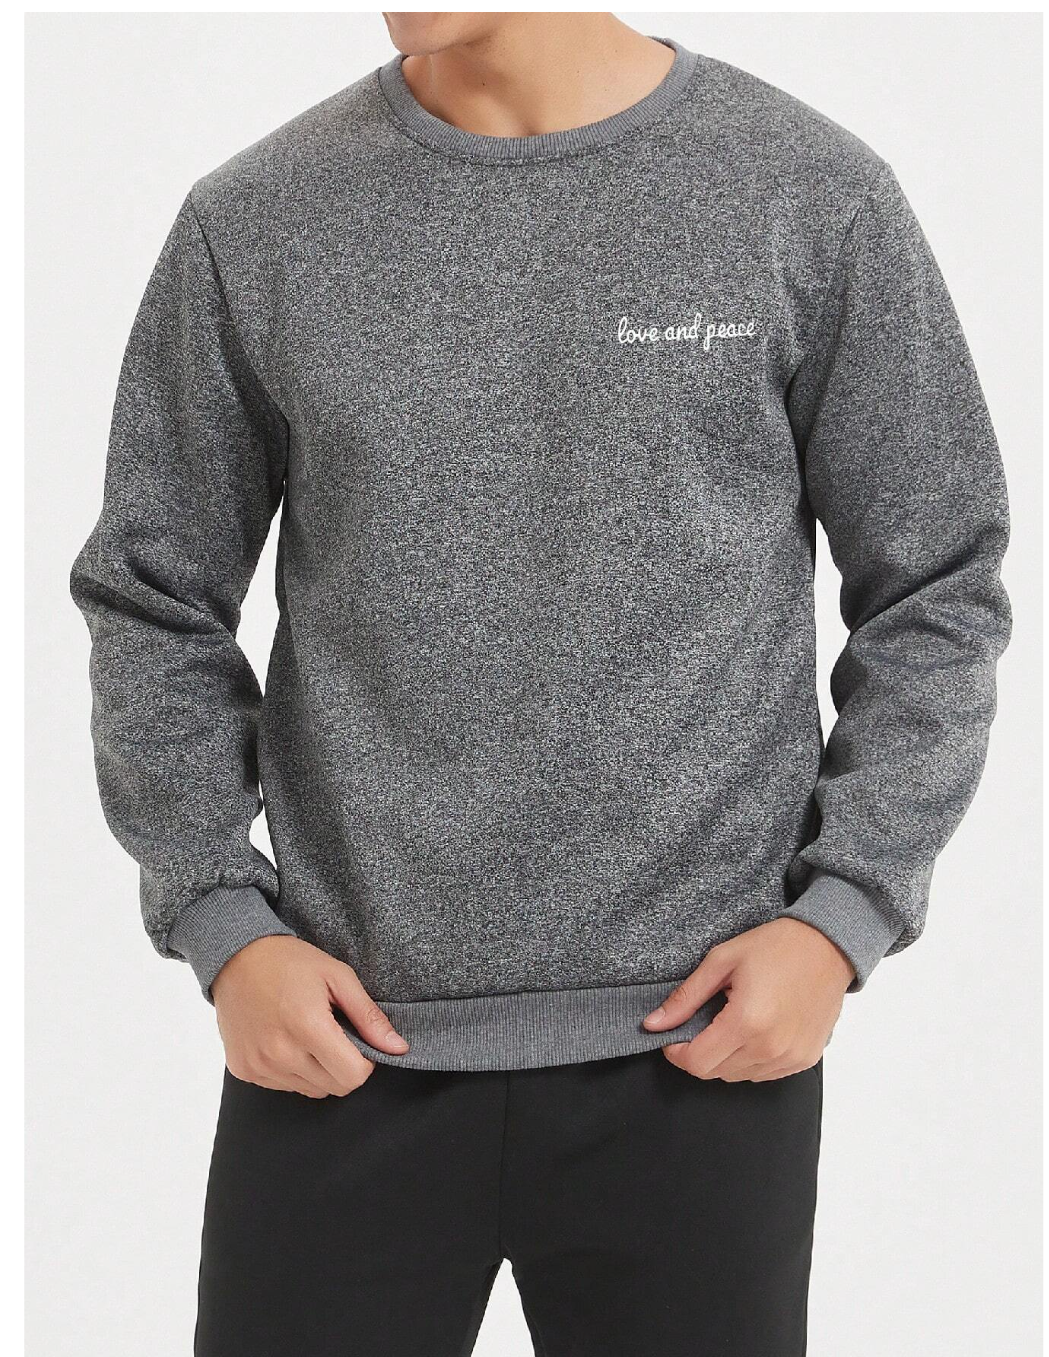 Infinity Style: Manfinity Hypemode Men's Fleece Letter Printed Sweatshirt